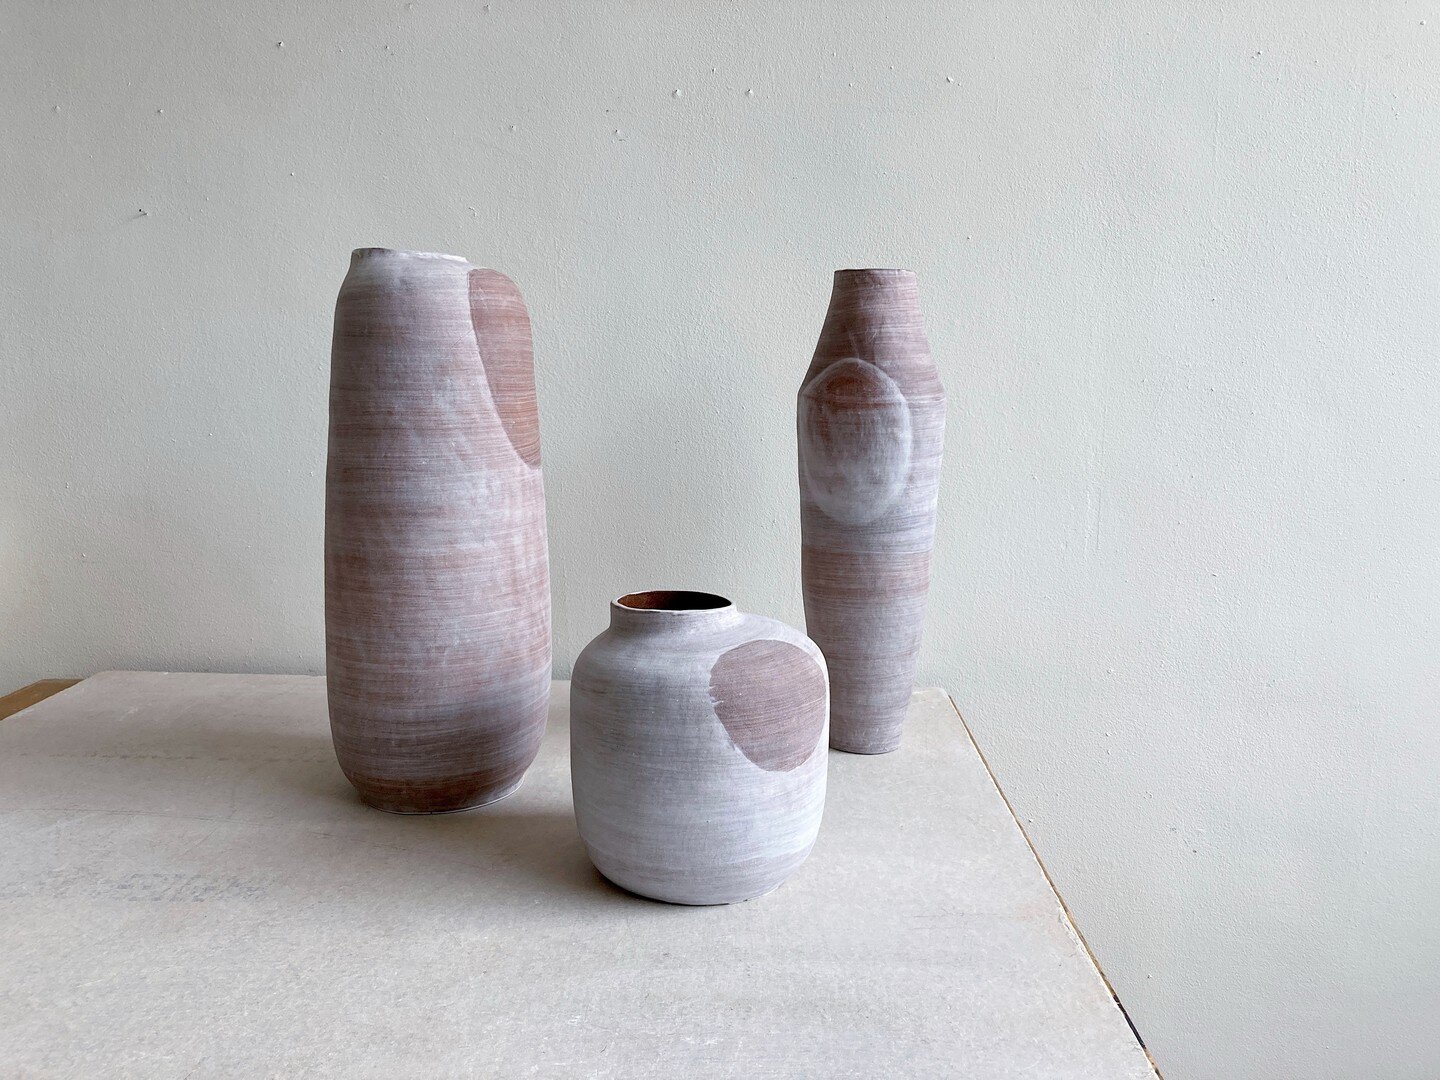 nōdus vessels 7.22 
.
.
.
#carnevale365 #nodusvessel #coilbuilt #stoneware #ceramic #ceramics #pottery #design #interiordesign #sculptureforyoureveryday